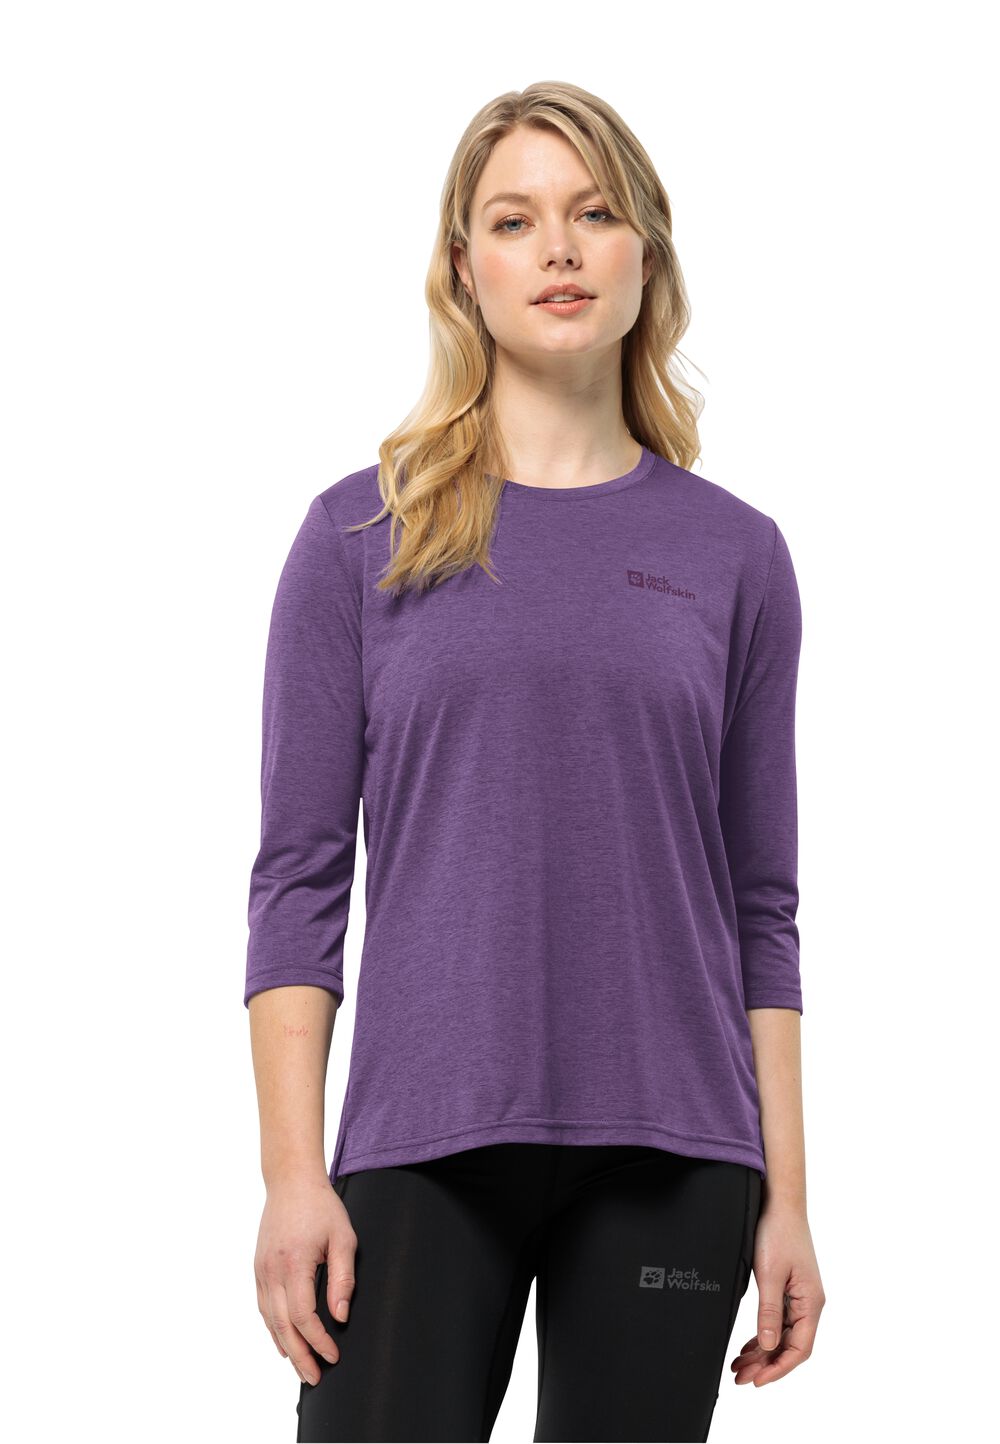 Jack Wolfskin Crosstrail 3 4 T-Shirt Women Functioneel shirt Dames XXL ultraviolet